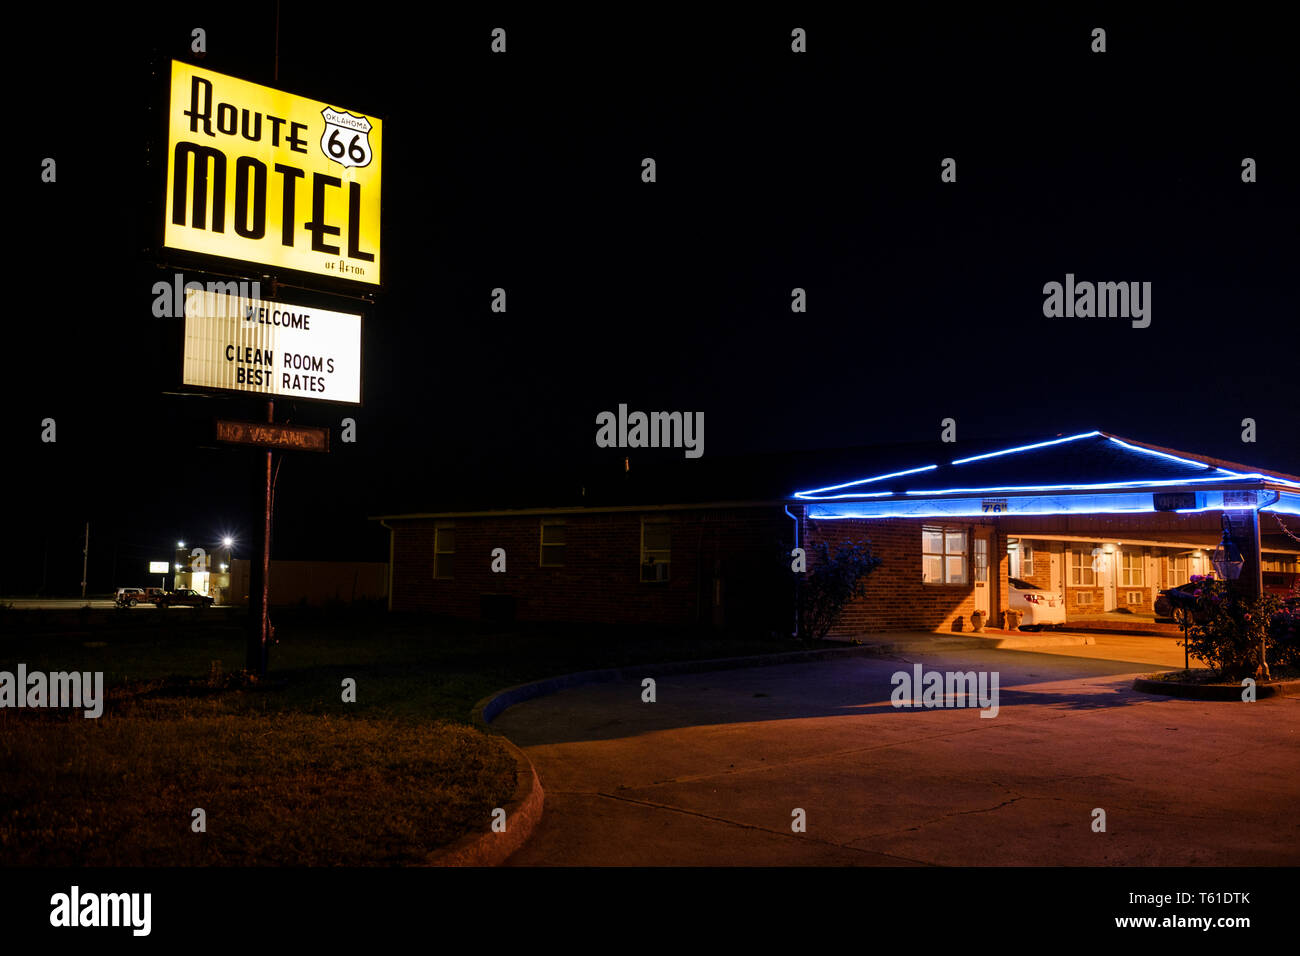 Route 66 Motel at night in Afton, Oklahoma, USA Stock Photo - Alamy